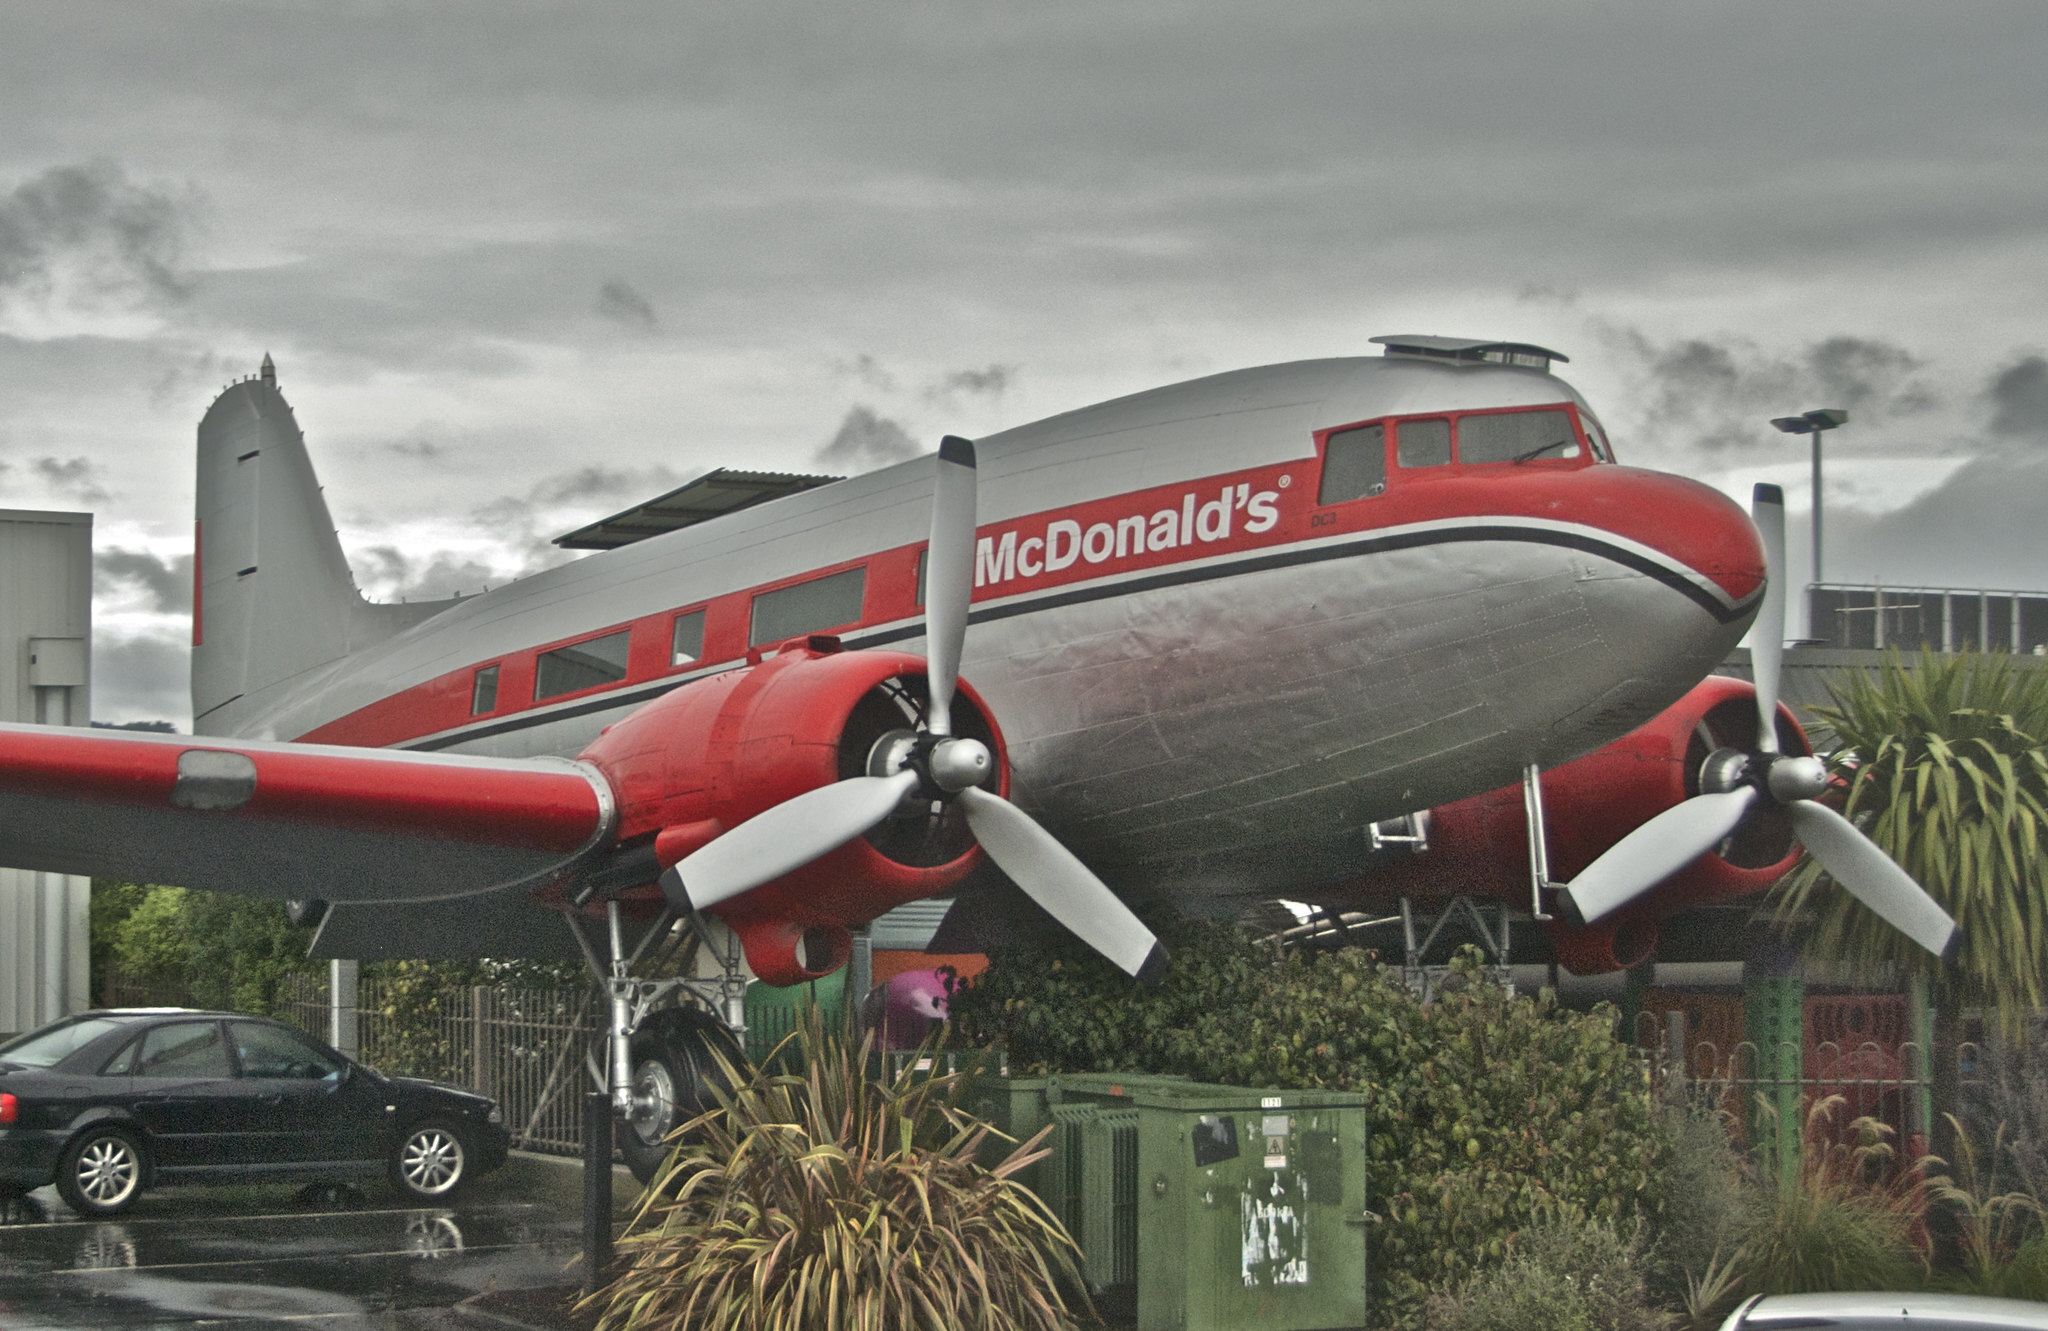 McDonald's Douglas DC-3C-S1C3G; ZK-CAW@ Taupo;25.07.2012/663aq by Aero Icarus via Flickr/Creative Commons